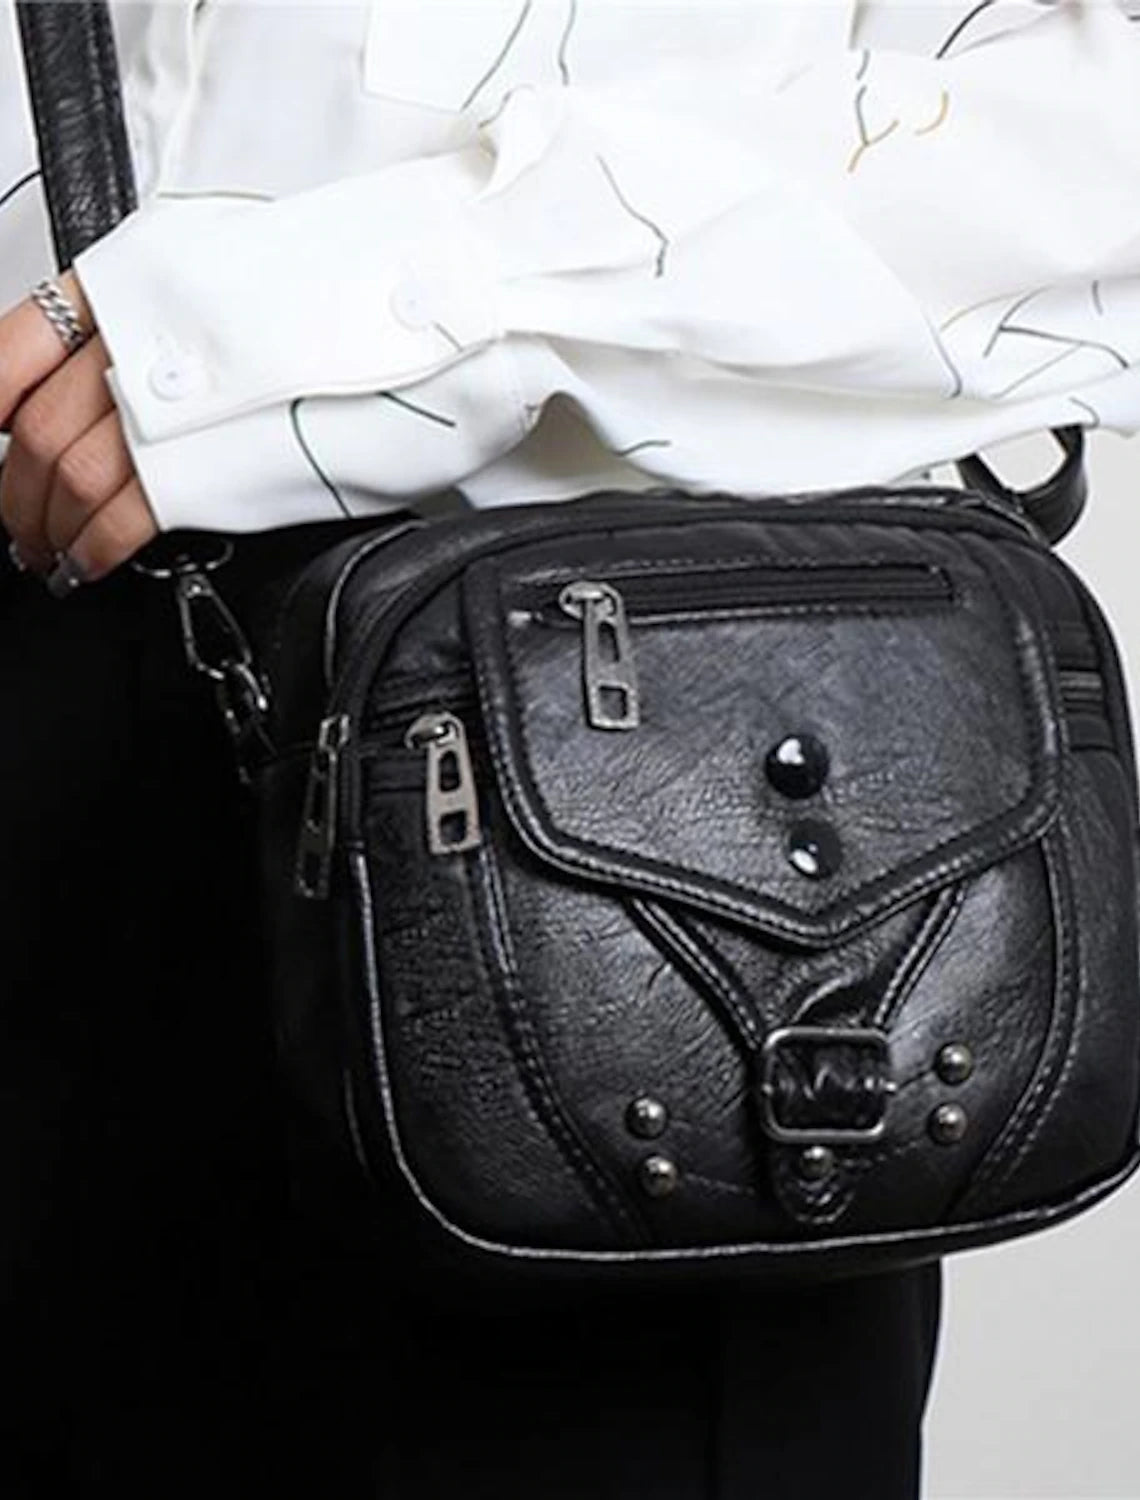 Fashion Cross Body Bag Women Handbags Bags PU Leather Purses and Handbags Vintage Designer Bag Crossbody Bags